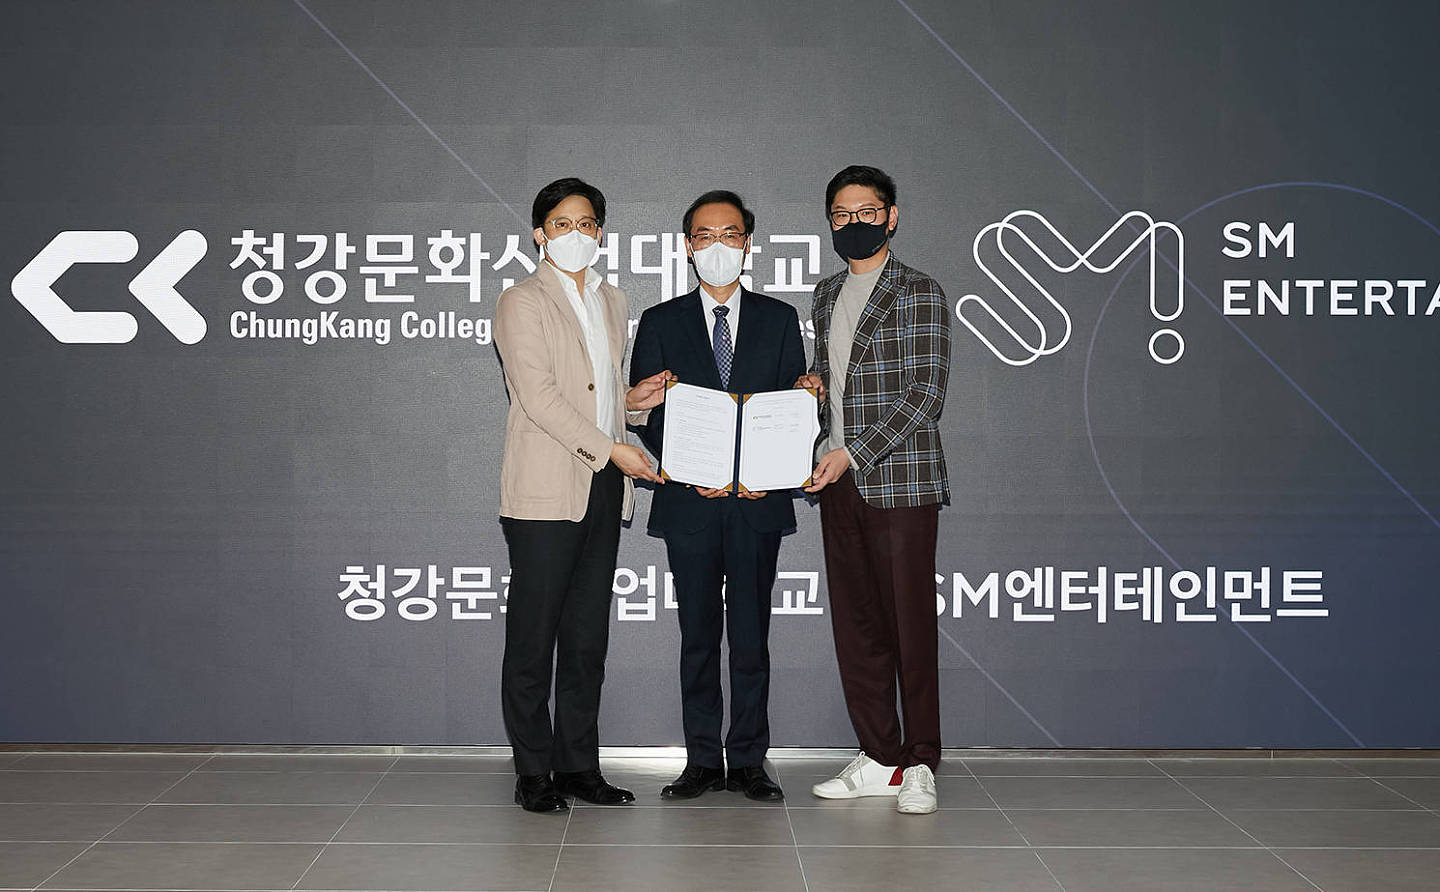 SM娱乐为加强元宇宙内容的竞争力 与青江文化产业大学签订产学合作MOU！ - 1